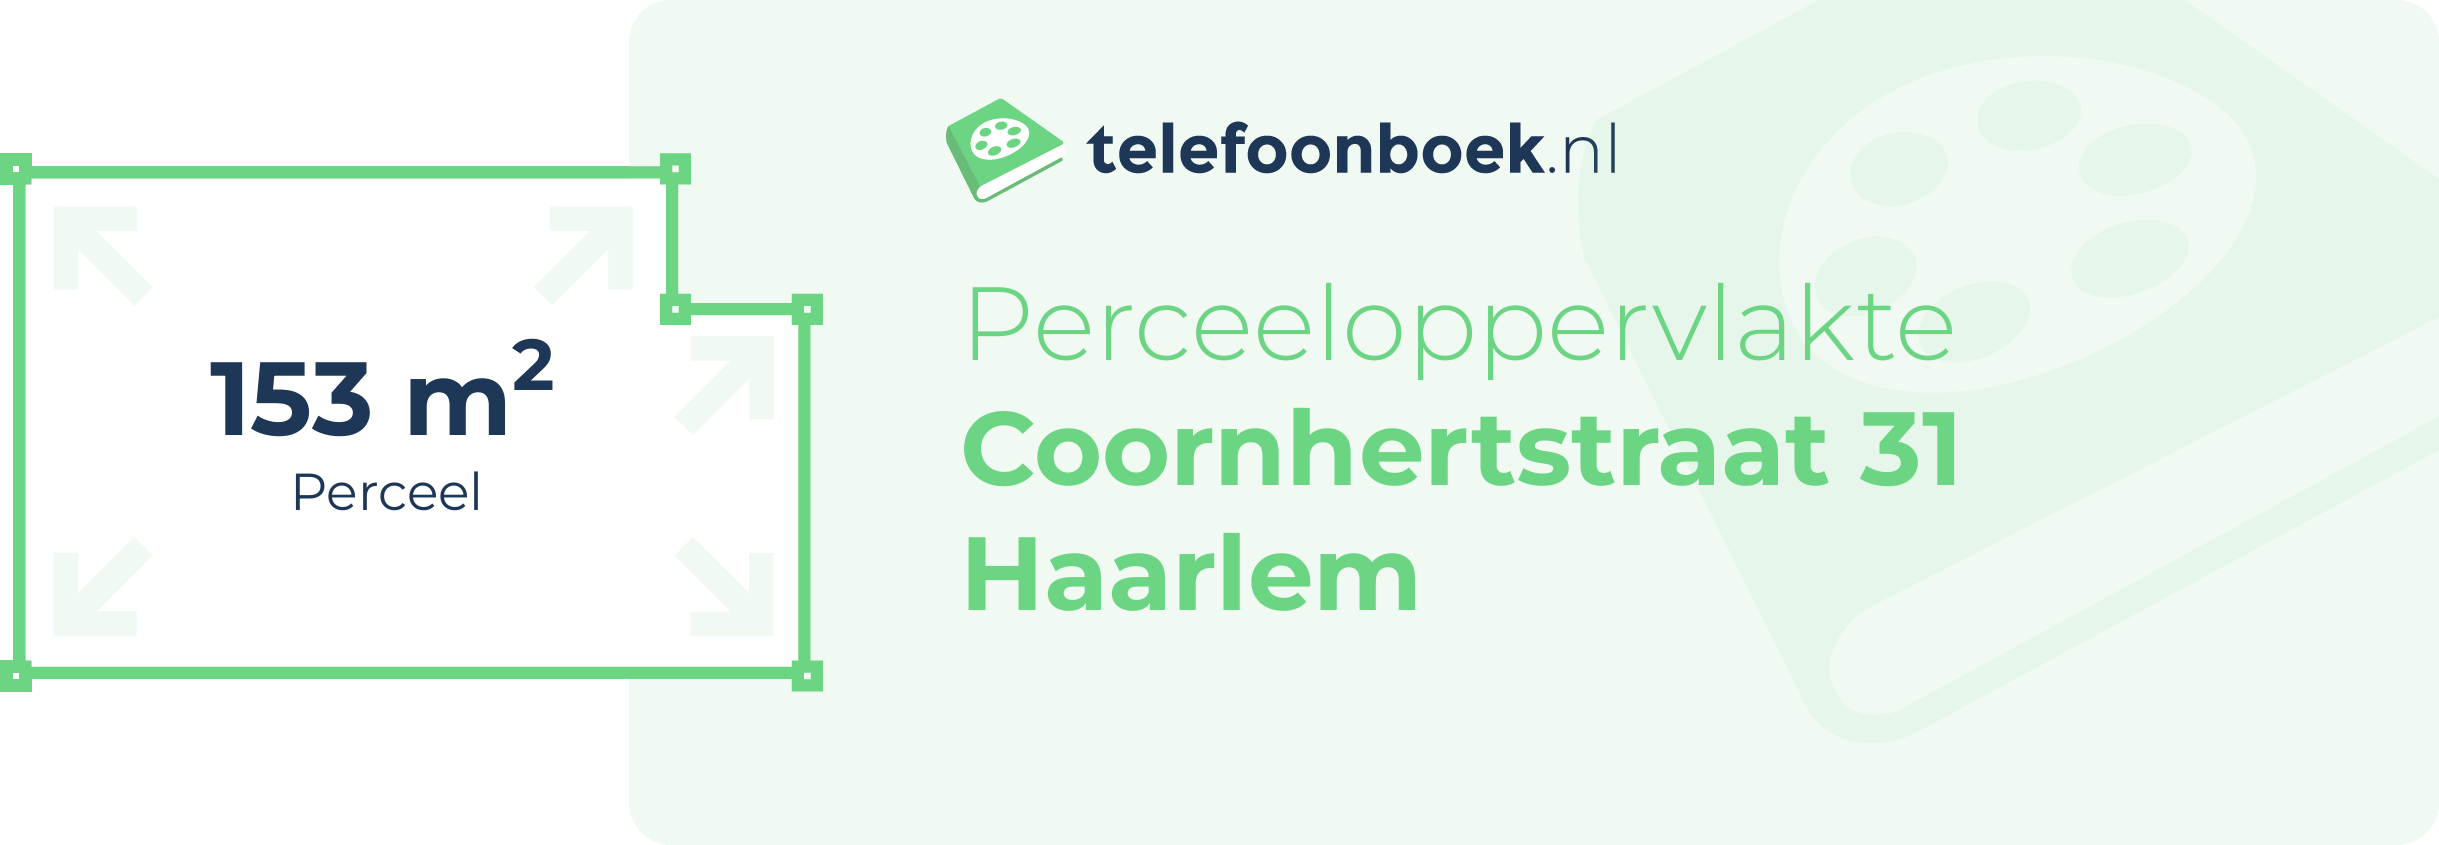 Perceeloppervlakte Coornhertstraat 31 Haarlem